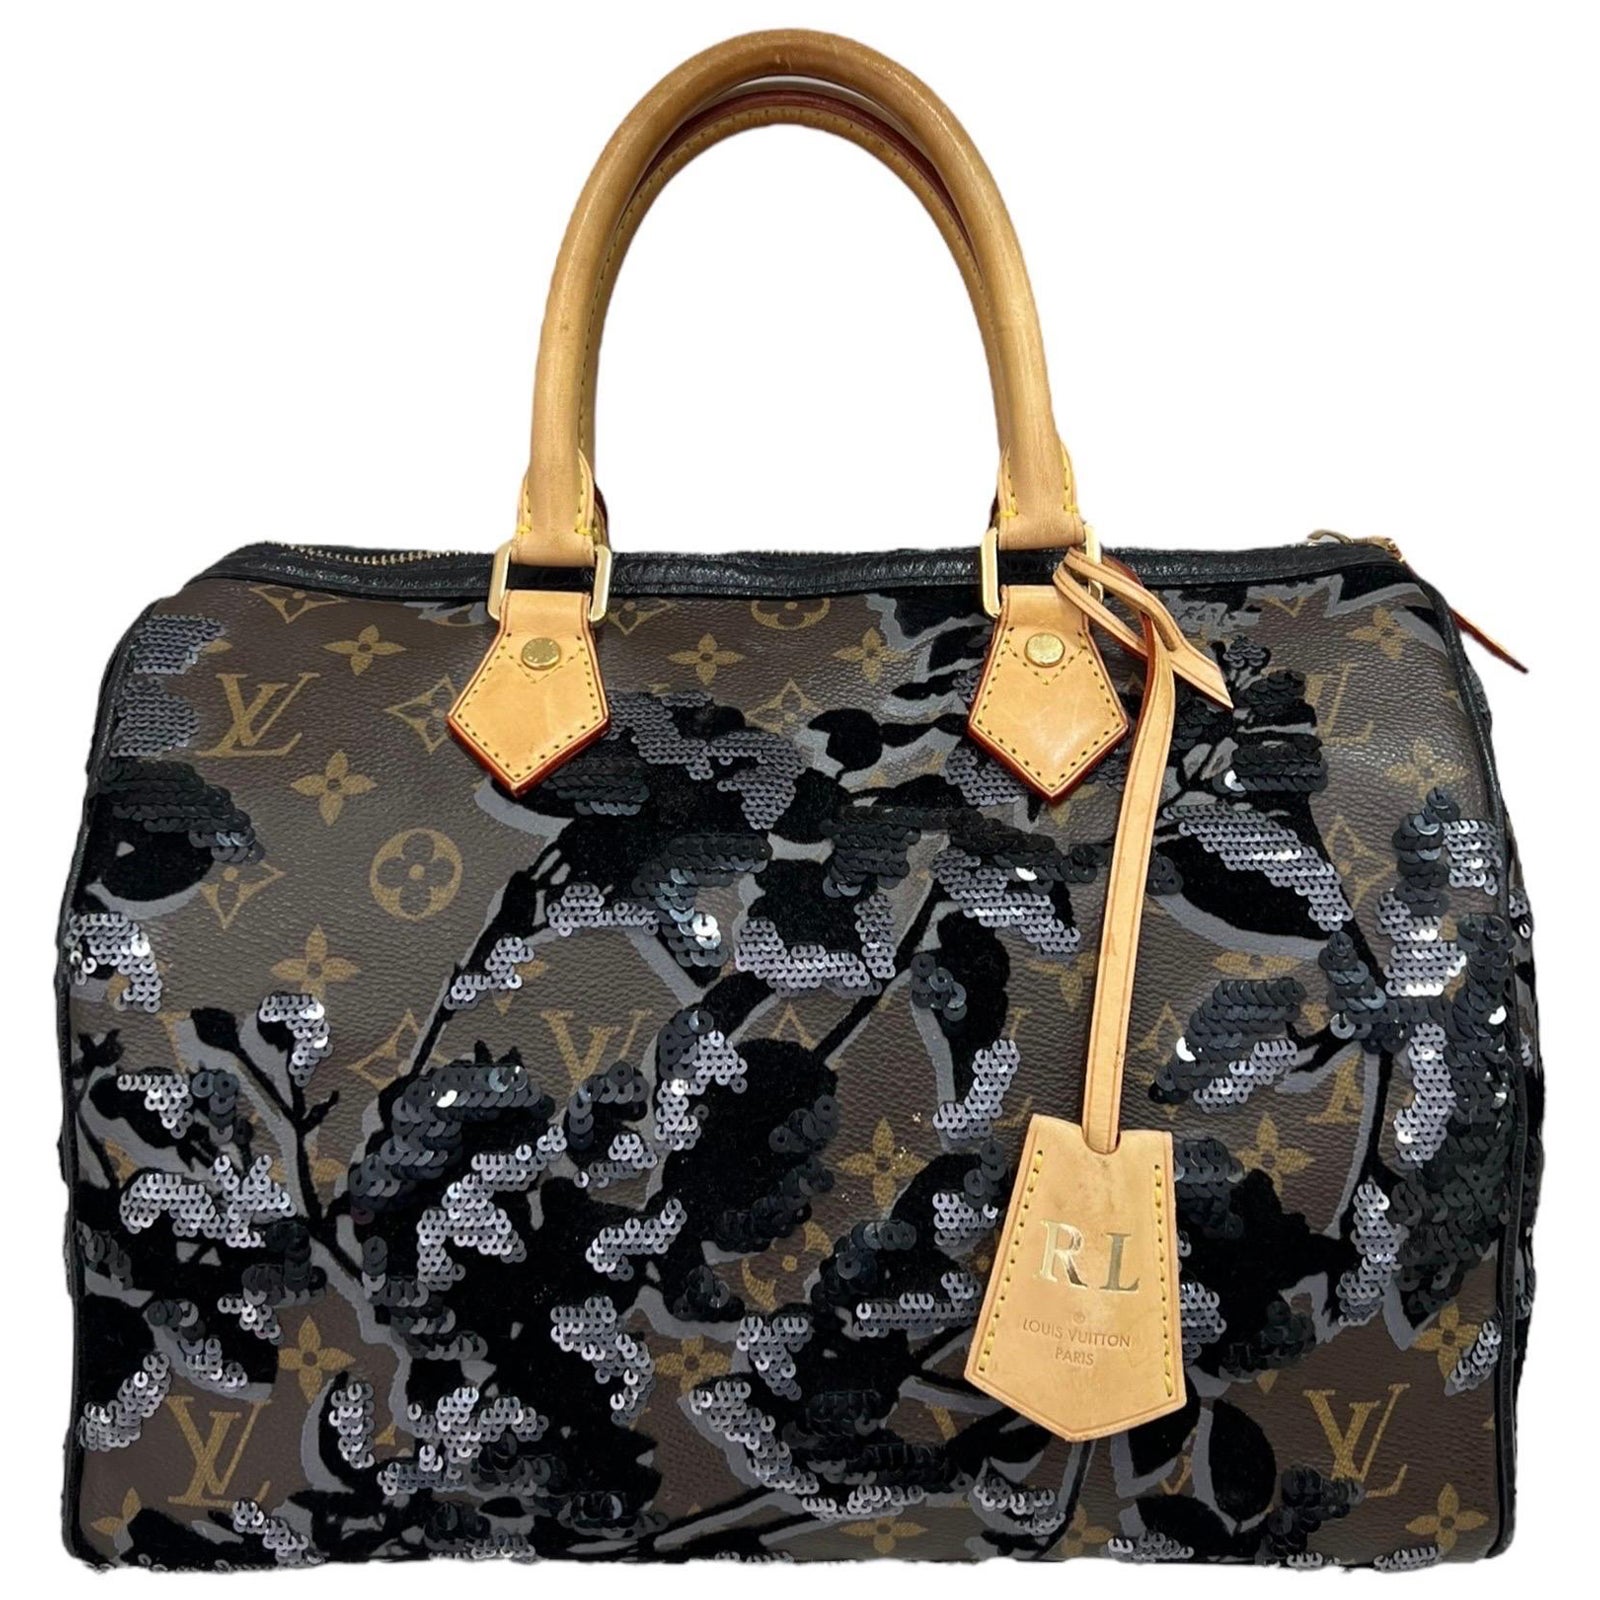 Do Louis Vuitton bags ever go on sale?